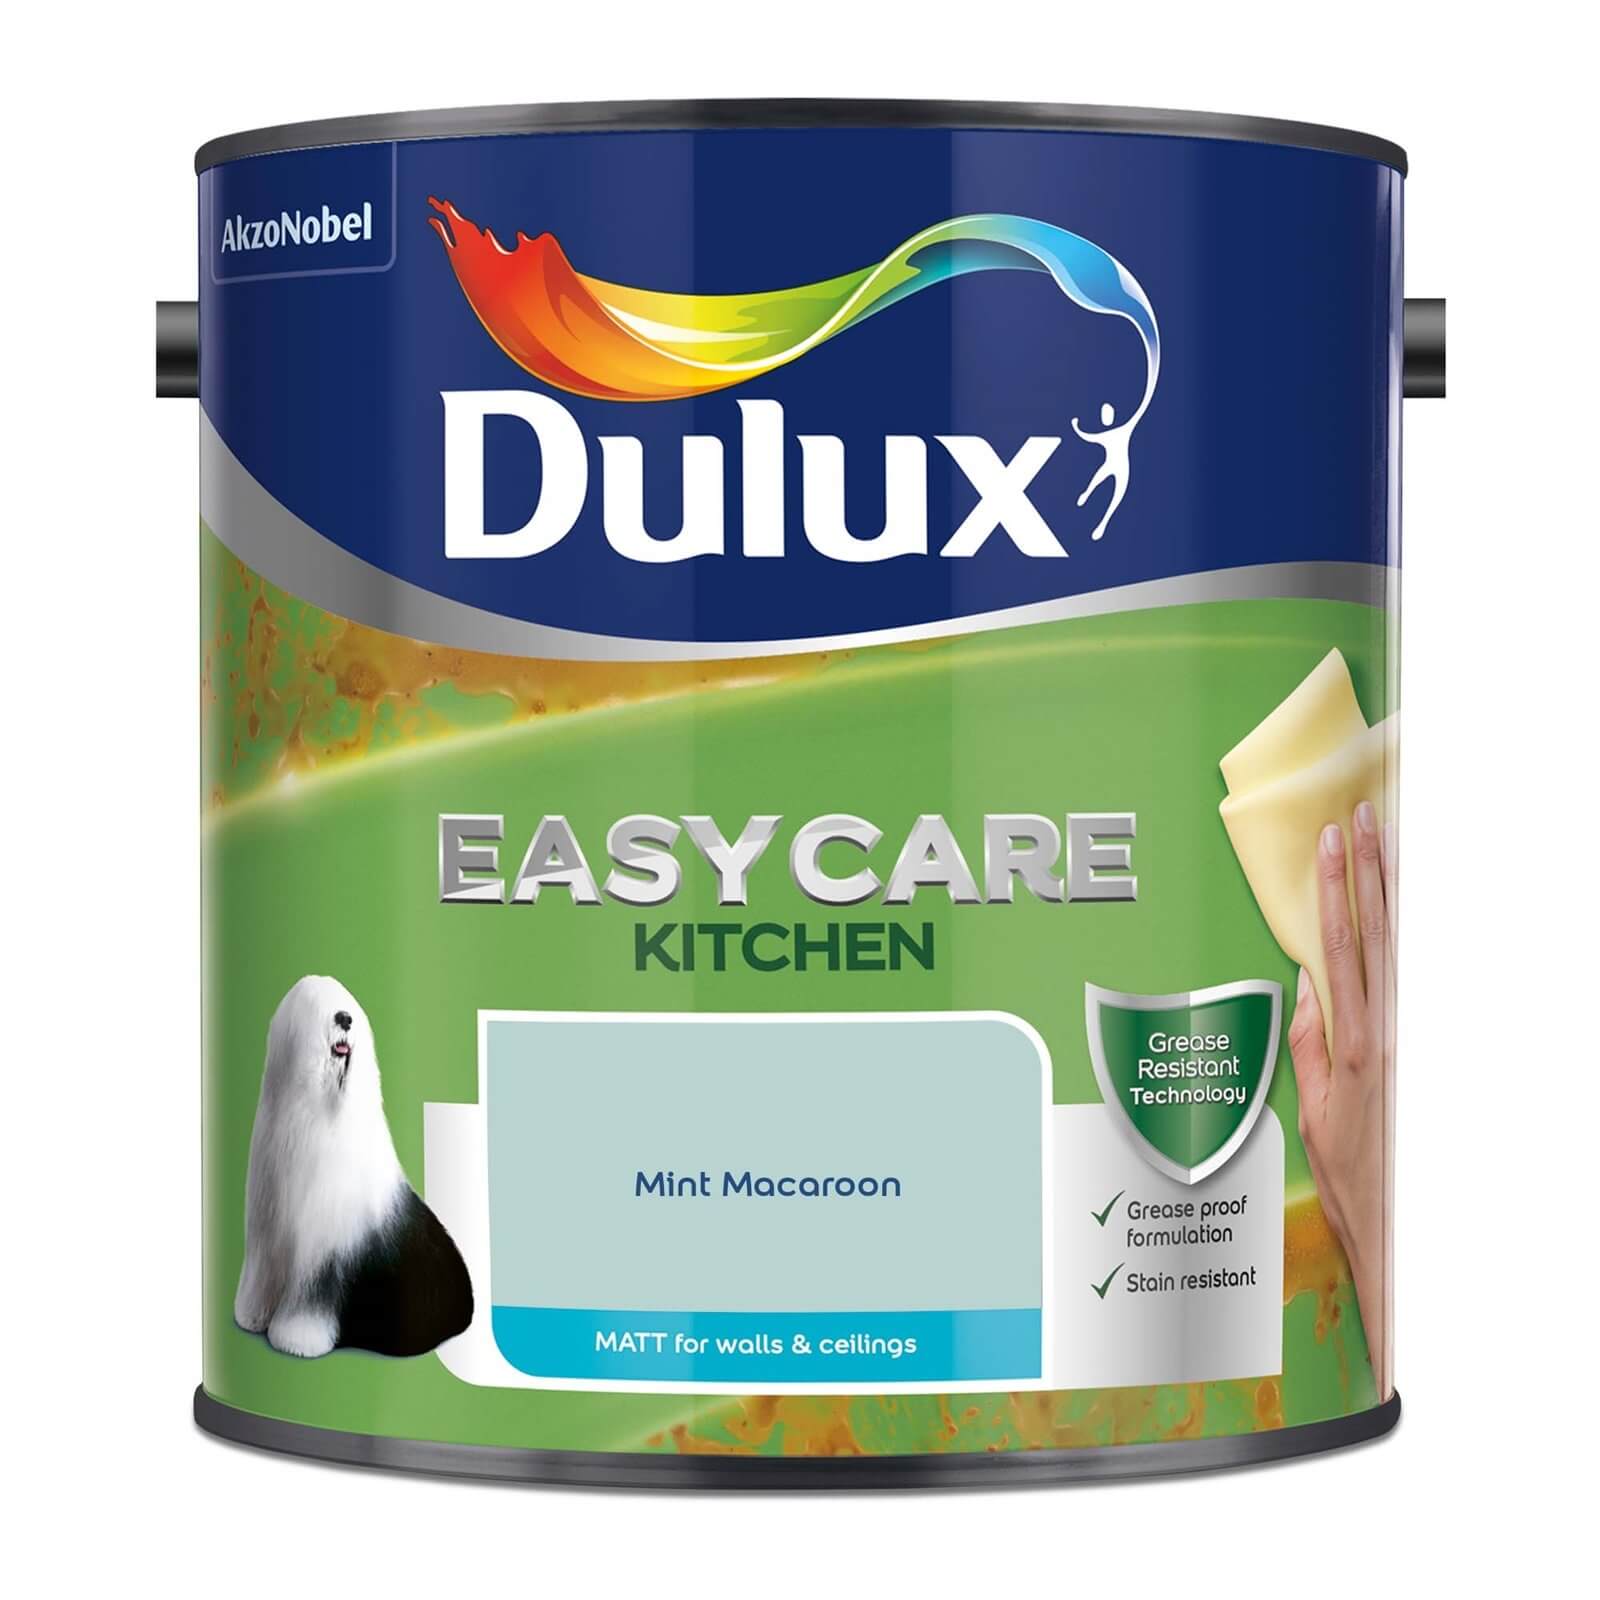 Dulux Easycare Kitchen Mint Macaroon Matt Paint - 2.5L